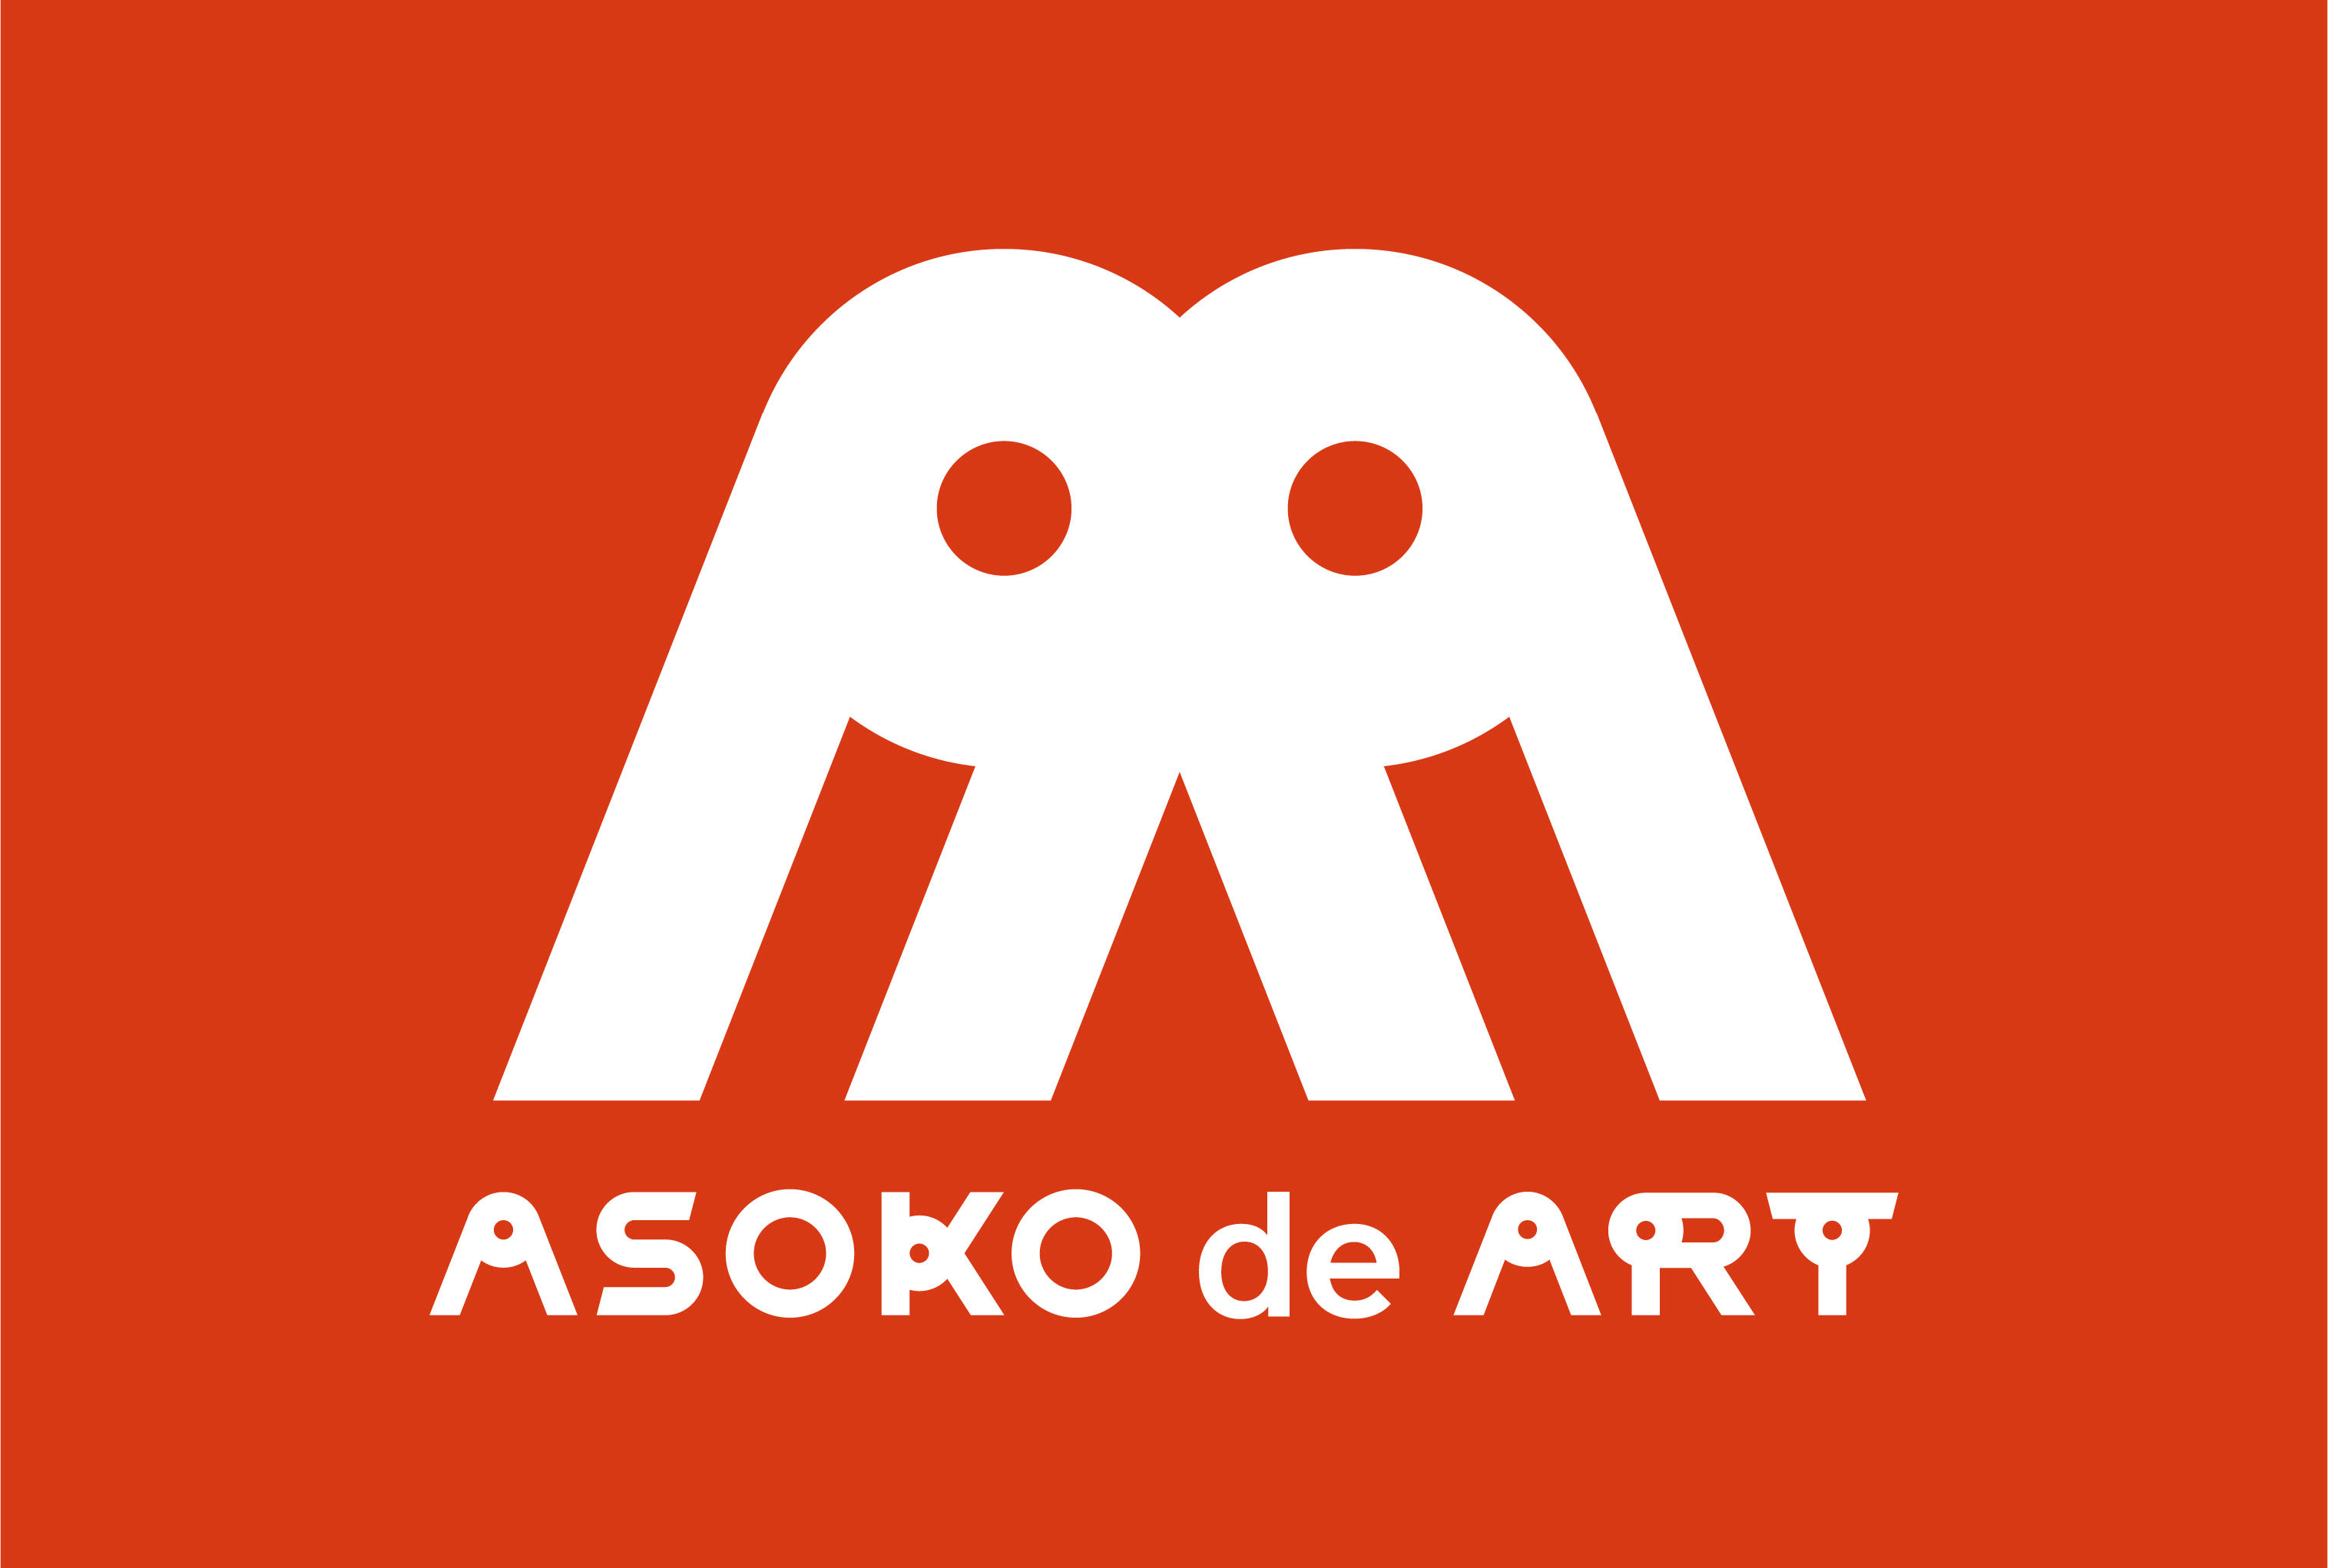 Asoko アソコ 公式通販サイト Pal Closet パルクローゼット パルグループ公式ファッション通販サイト